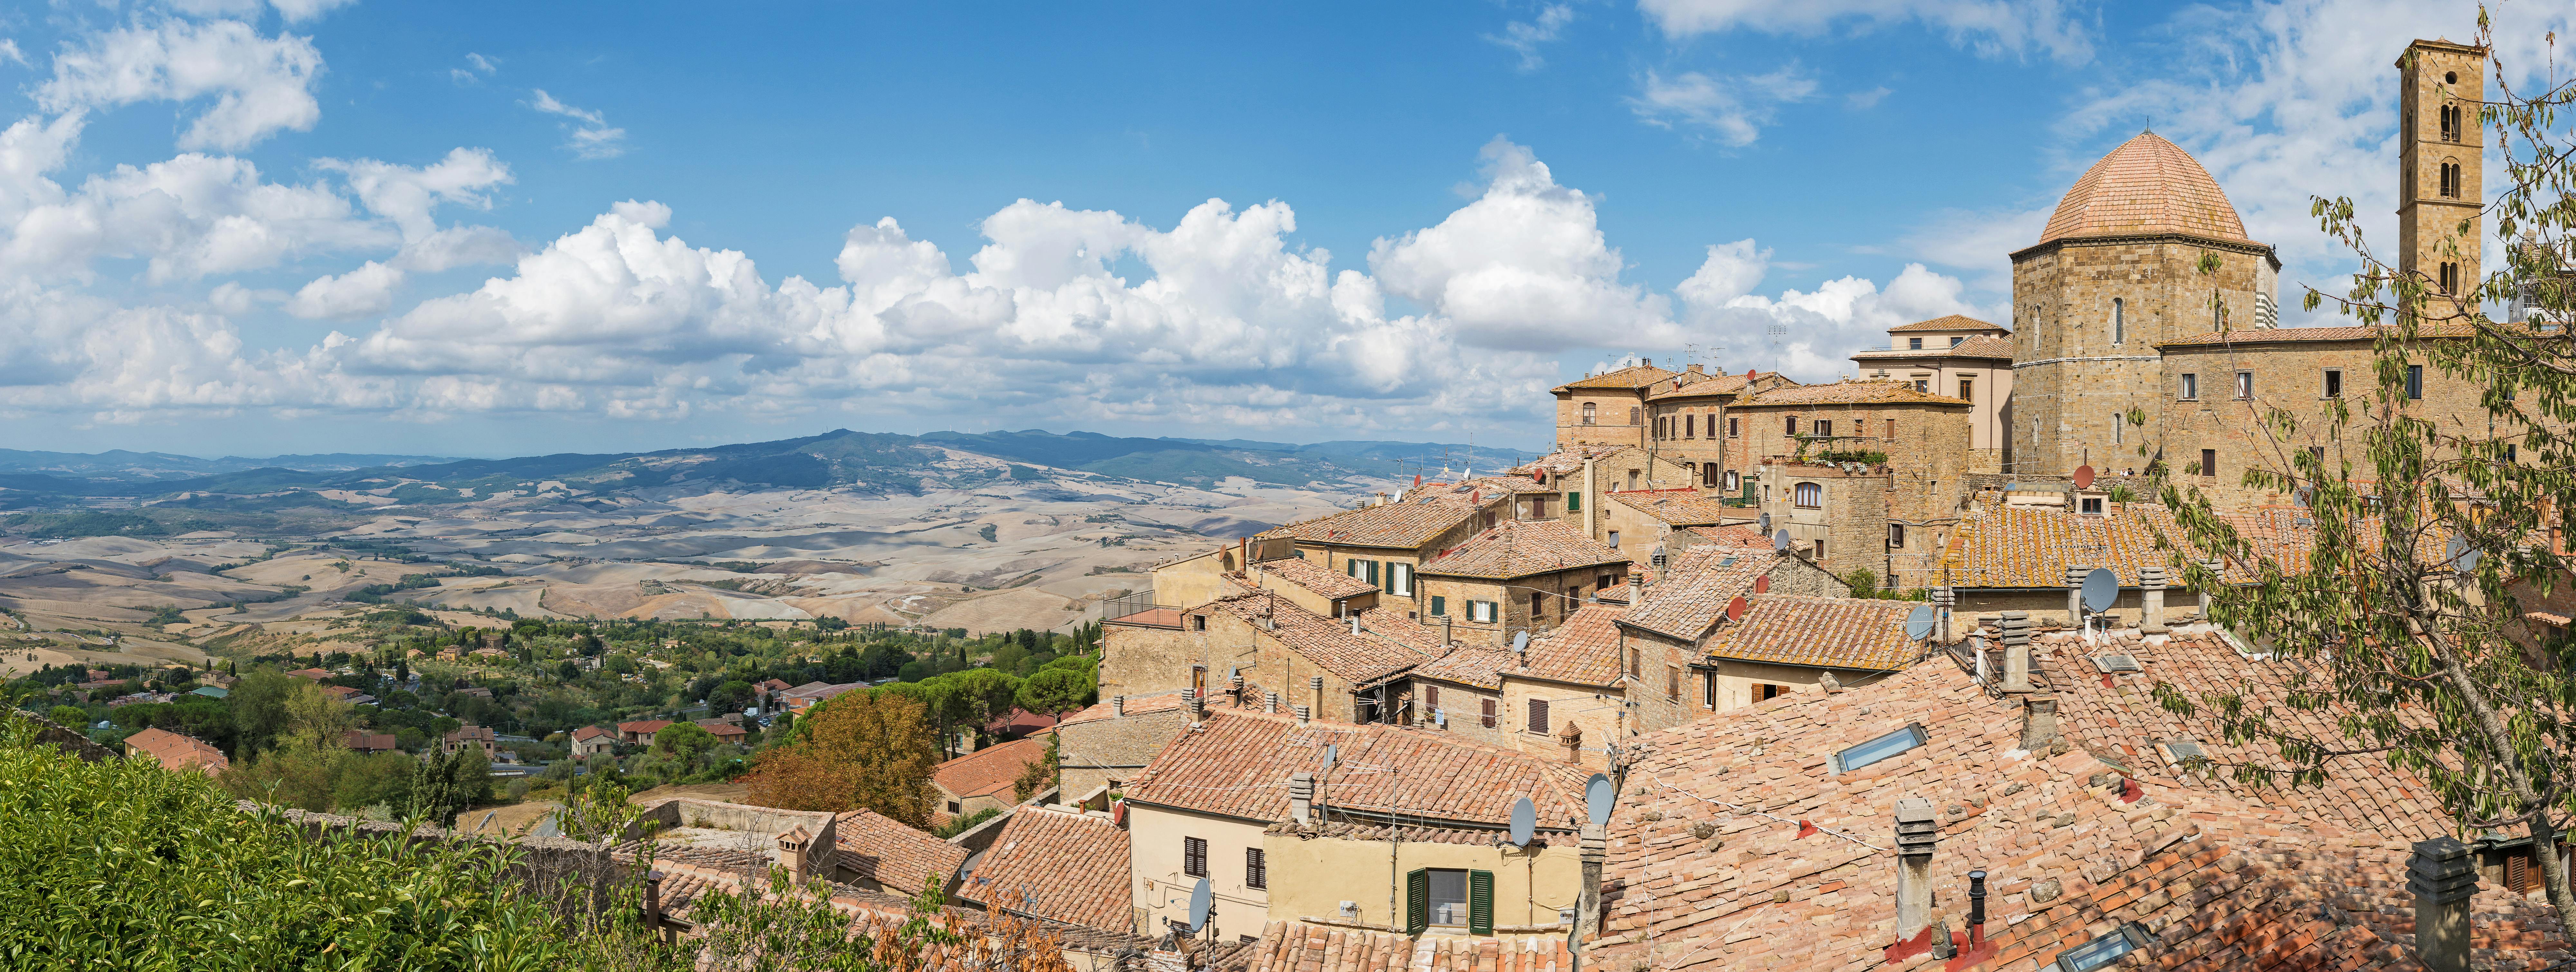 Privérondleiding door Volterra vanuit Florence